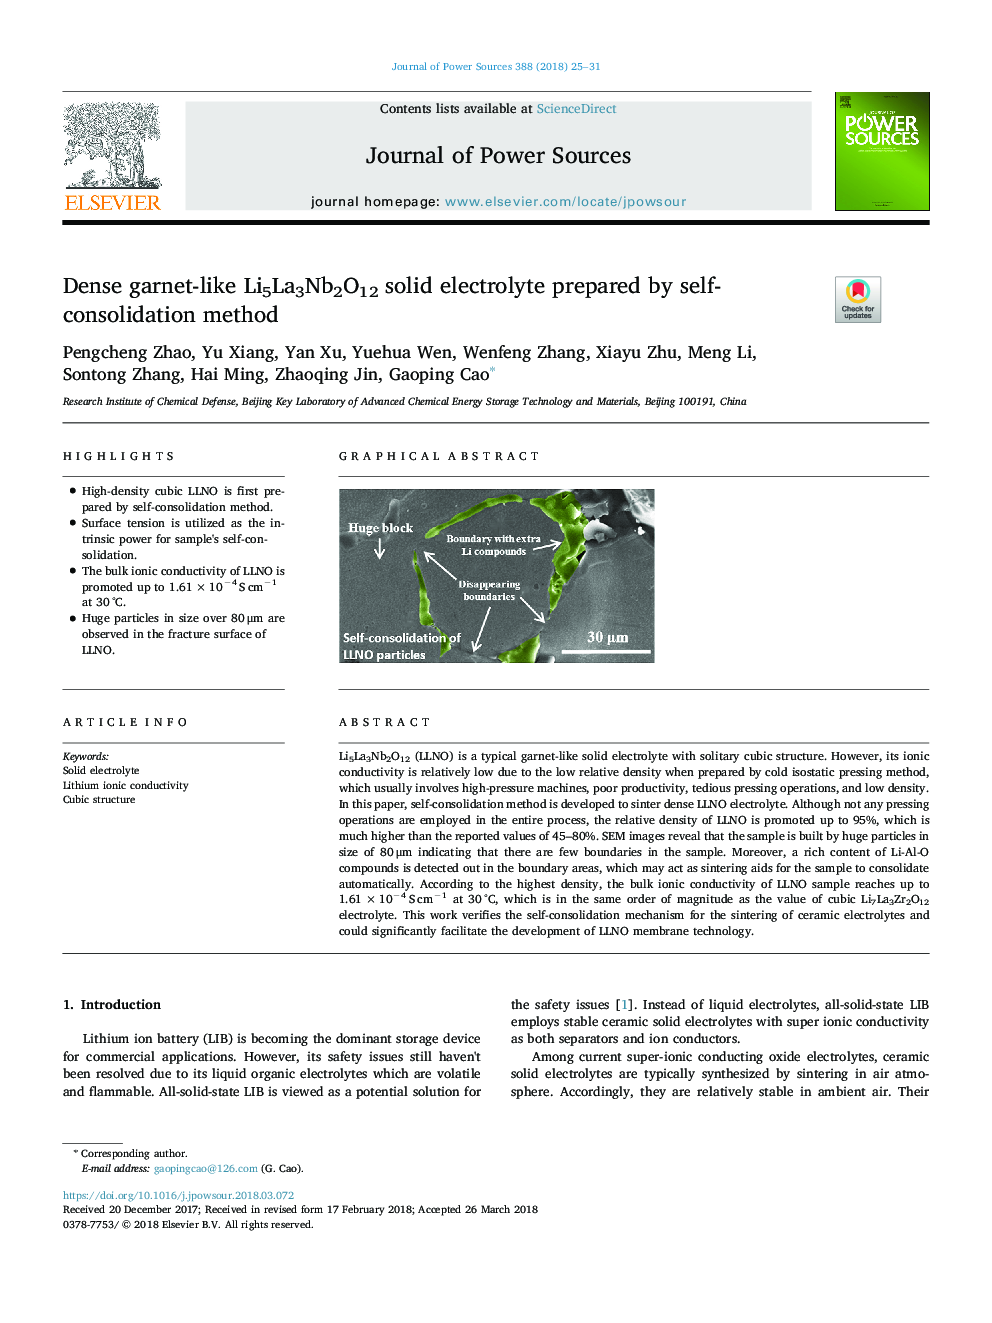 Dense garnet-like Li5La3Nb2O12 solid electrolyte prepared by self-consolidation method